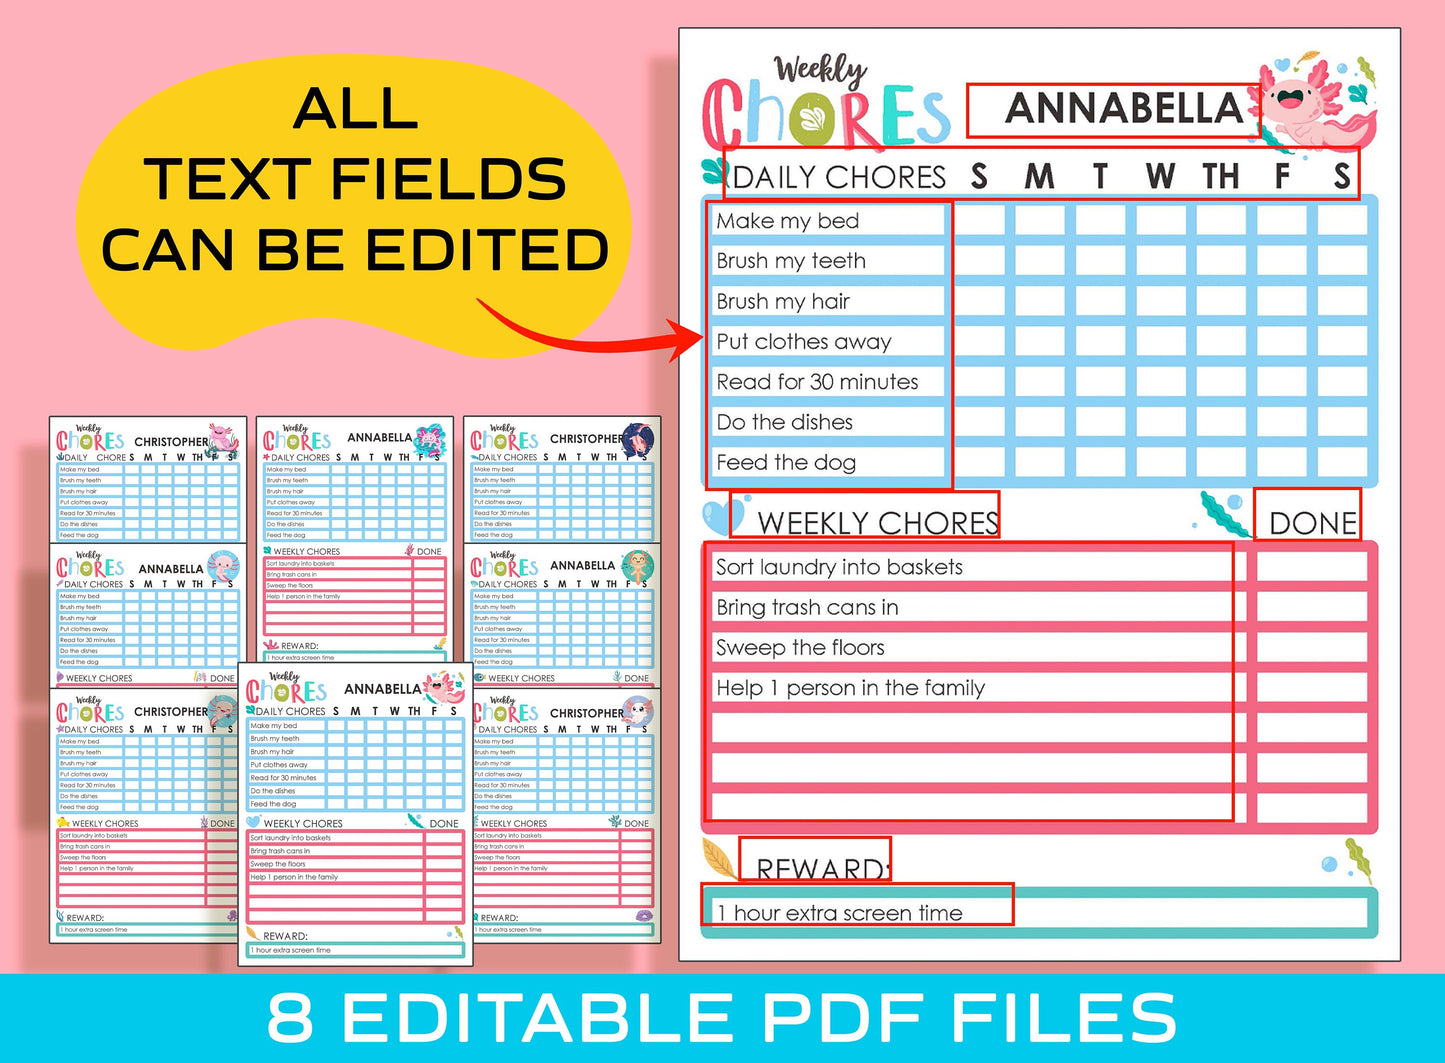 Chore Chart for Kids - Axolotl, Printable/Editable Chore Chart for Kids, Child Responsibility, Boys & Girls To Do List, Reward Chart/Routine